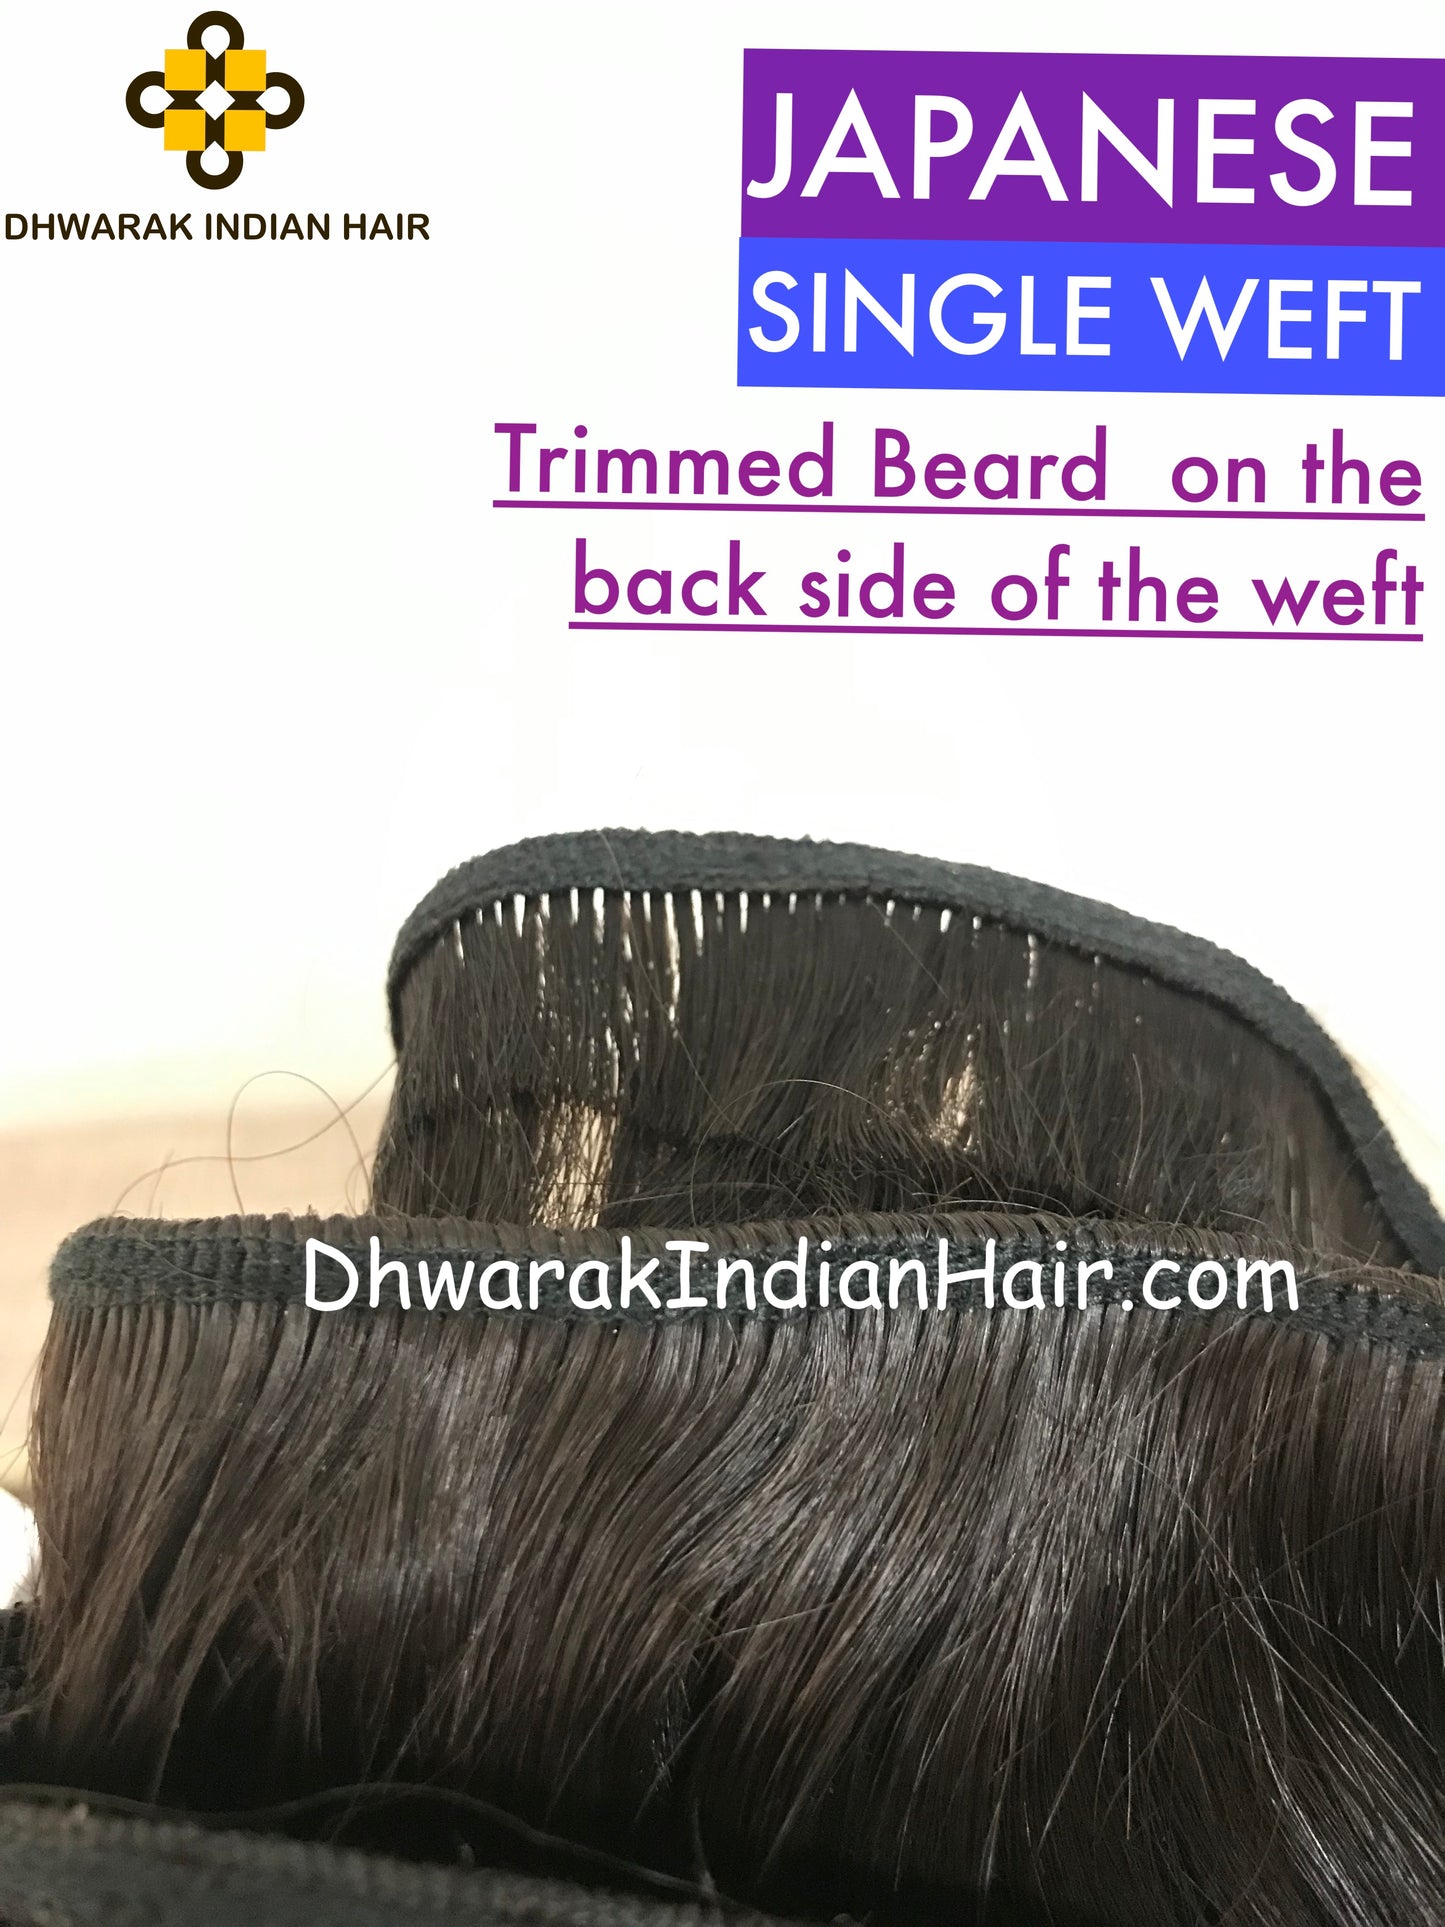 Hair Weaves Mix Textures - Wholesale Hair Vendors